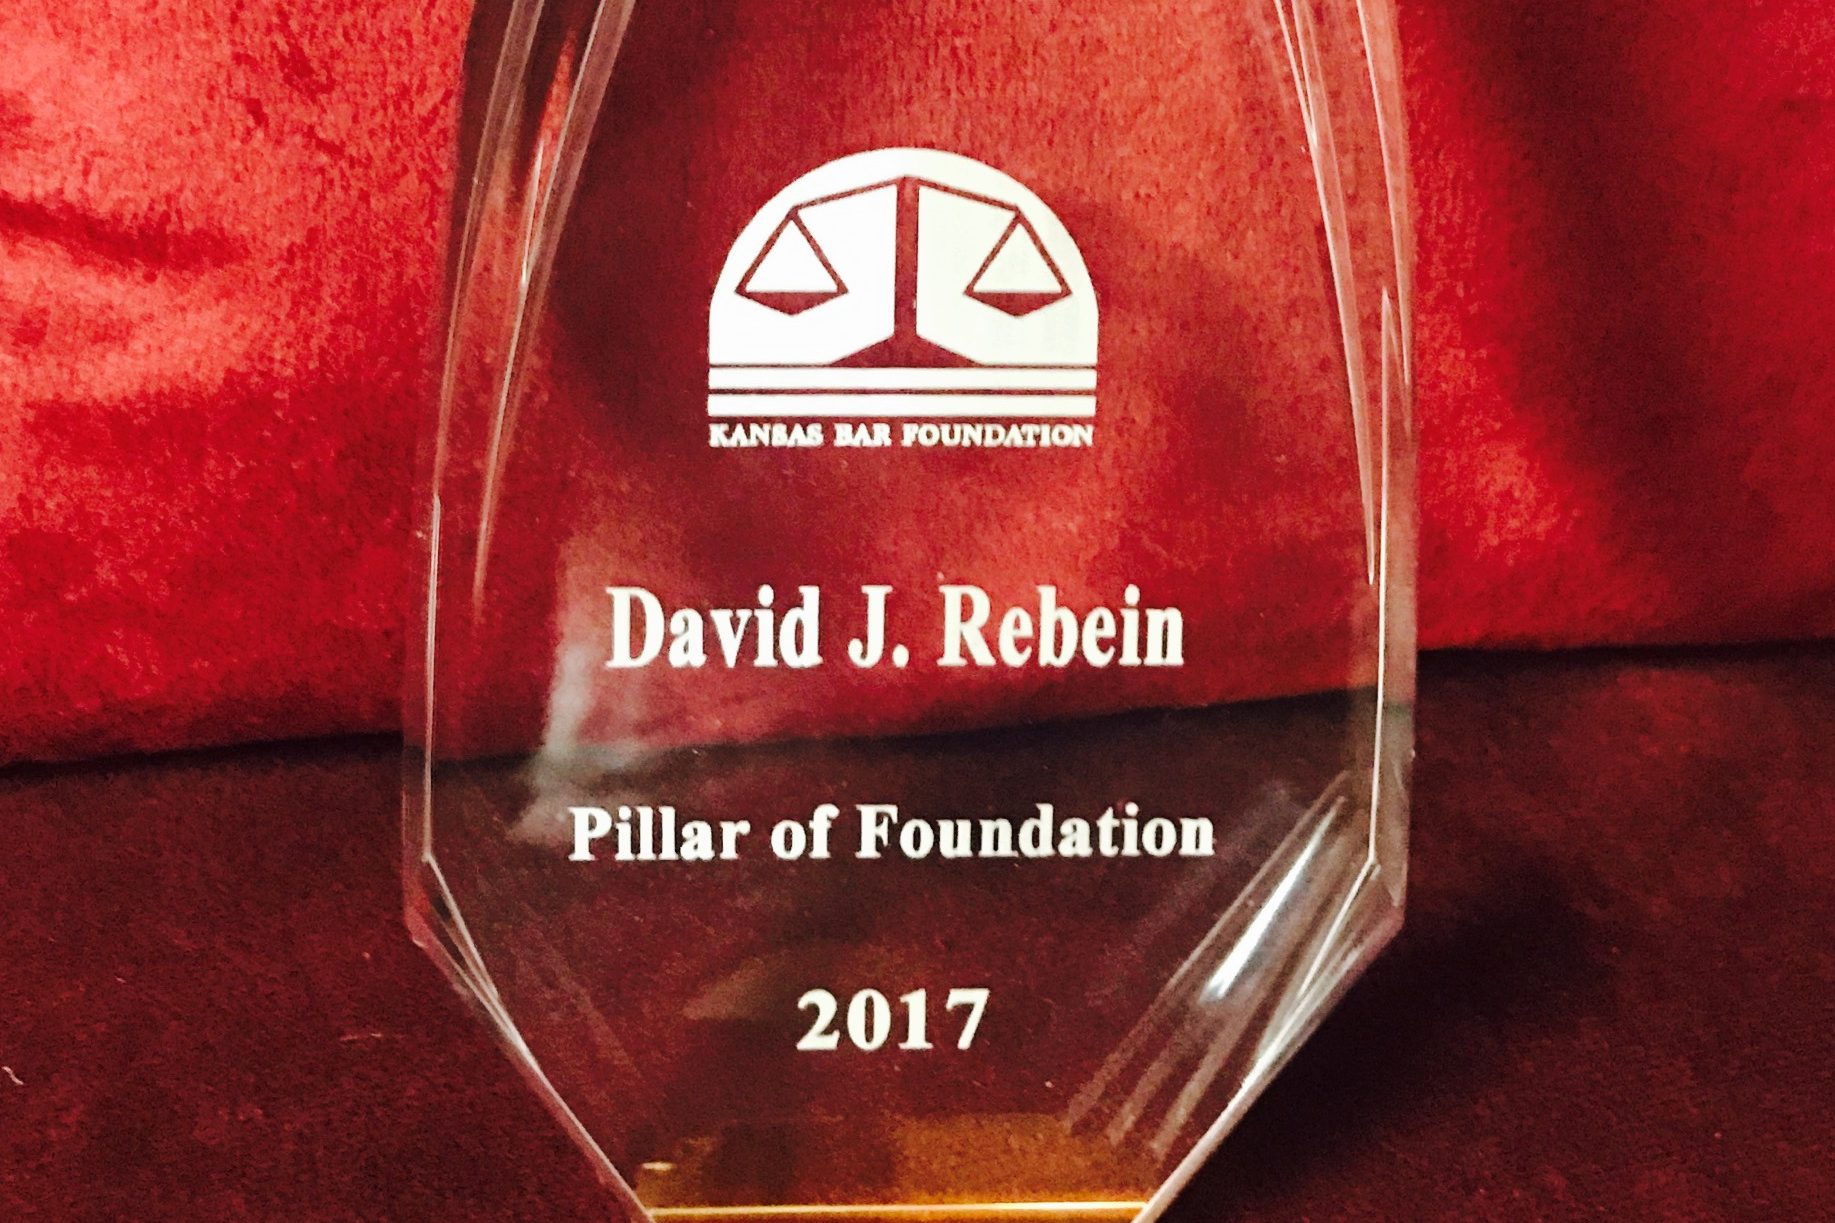 Pillar of Foundation Award